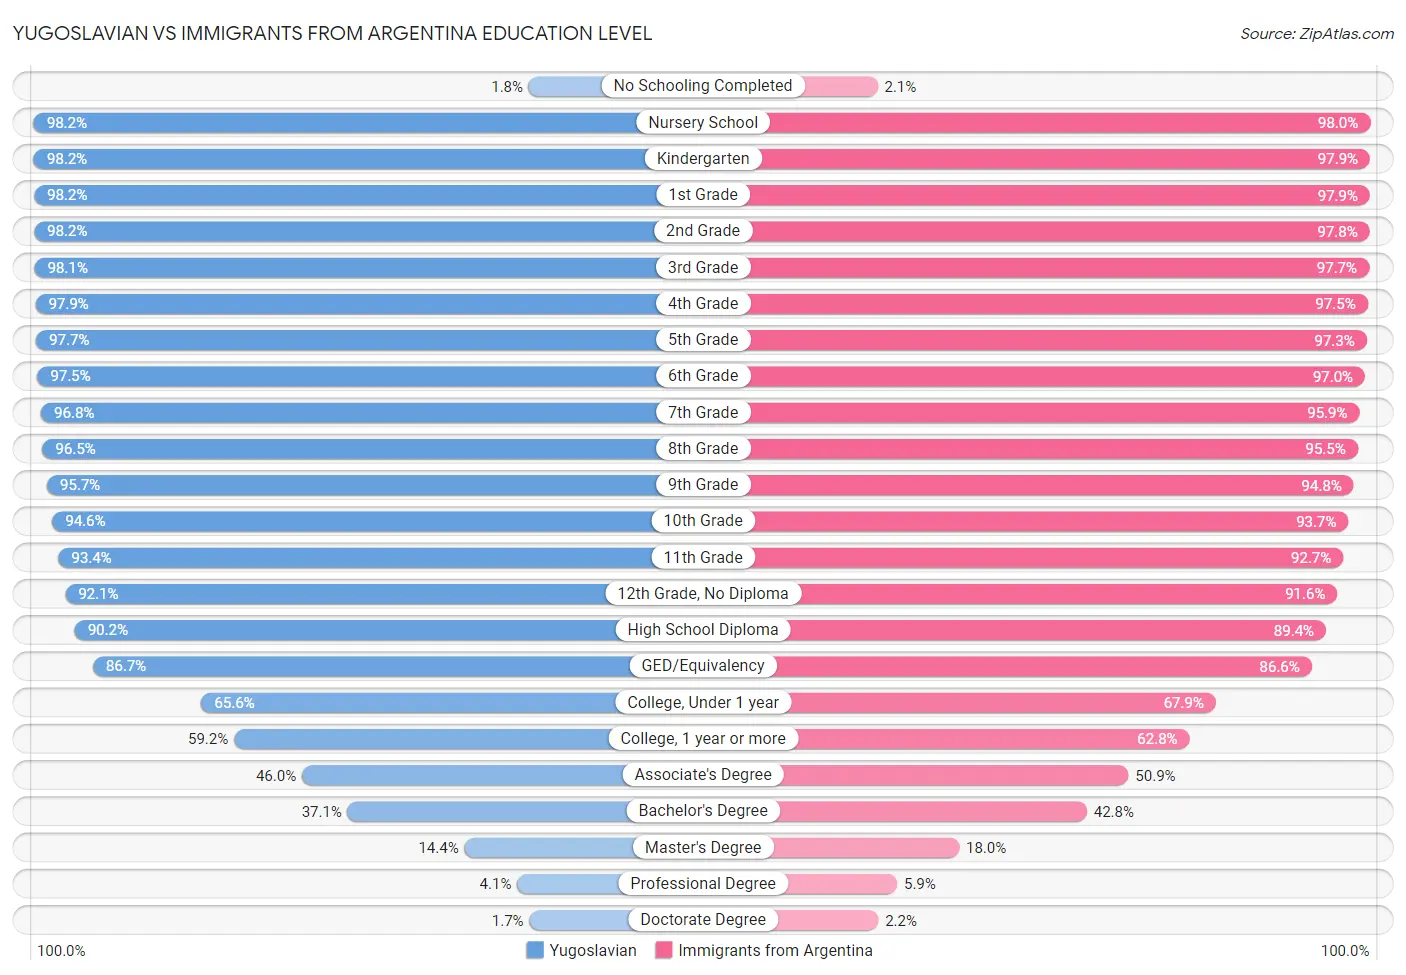 Yugoslavian vs Immigrants from Argentina Education Level